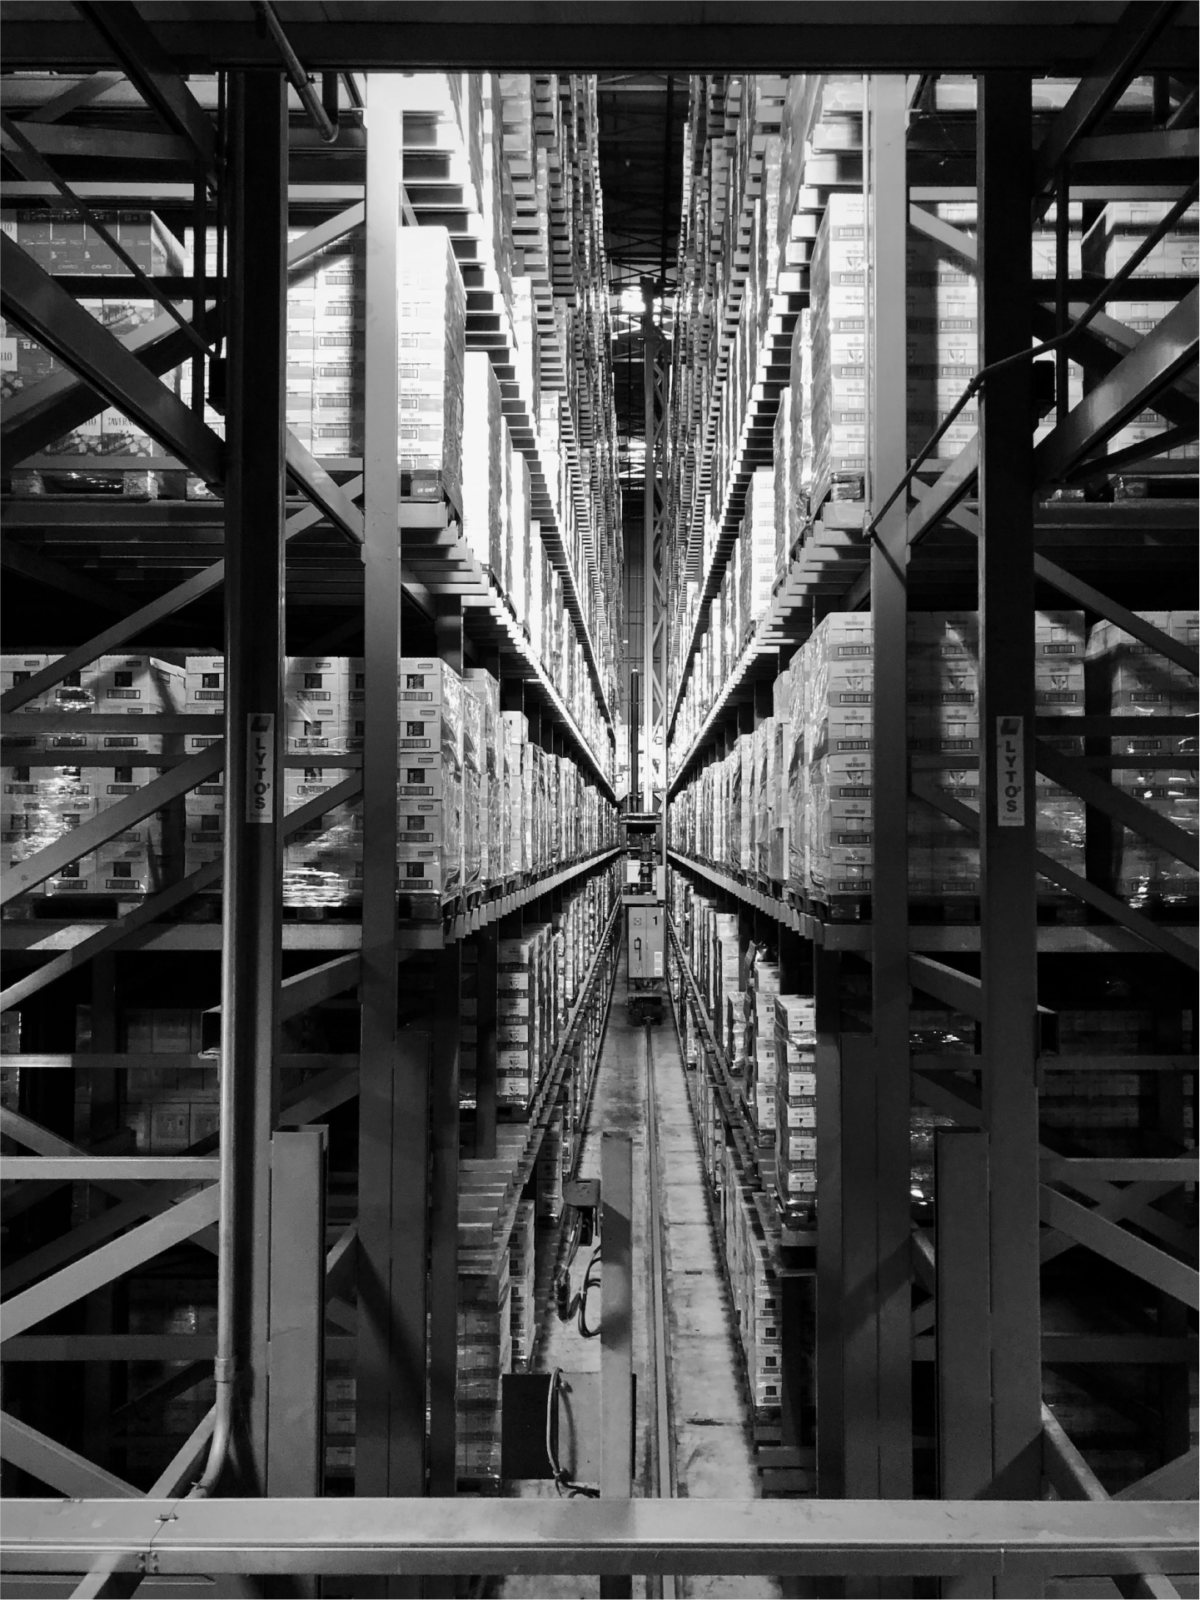 Interior photo of pallet racks in warehouse